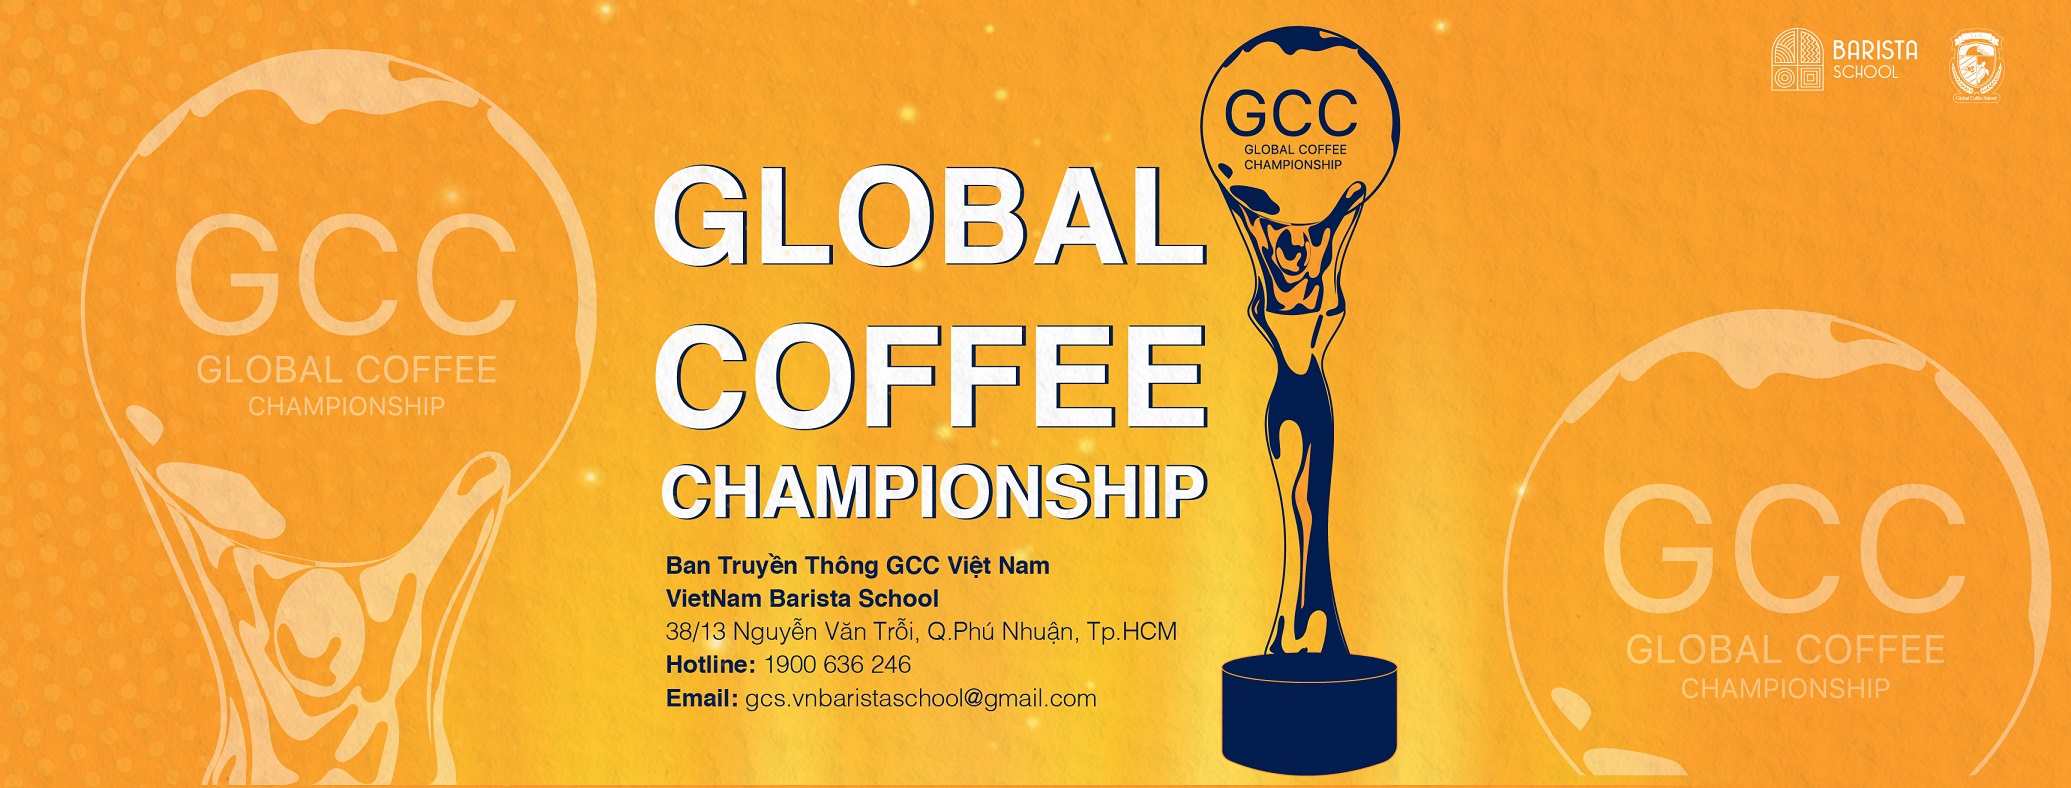 Global Coffee Championship